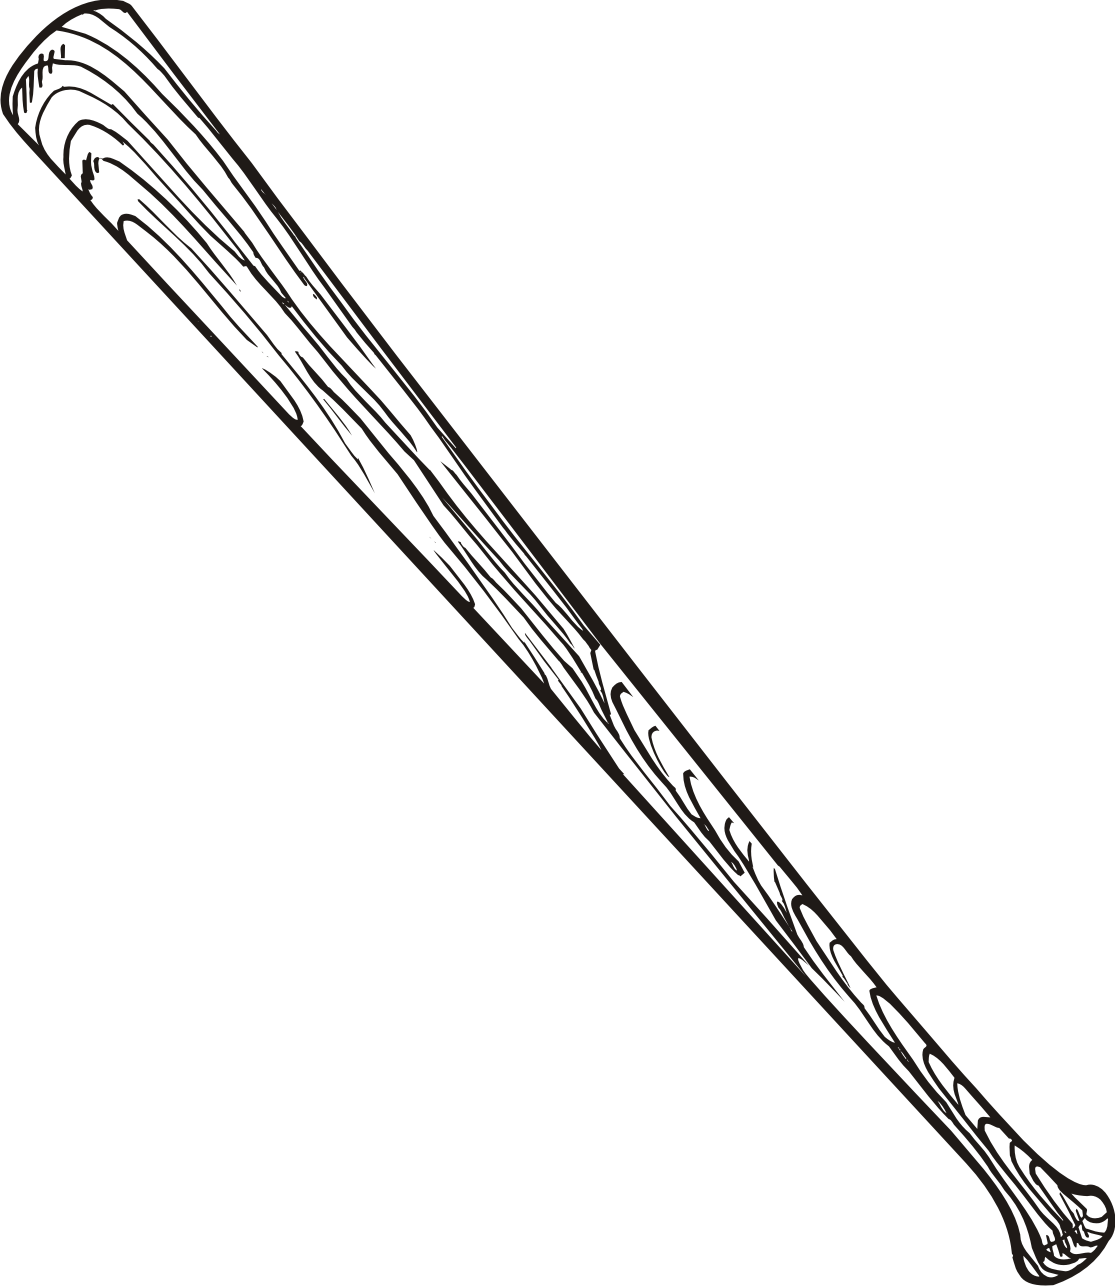 Clip art baseball bat clipart